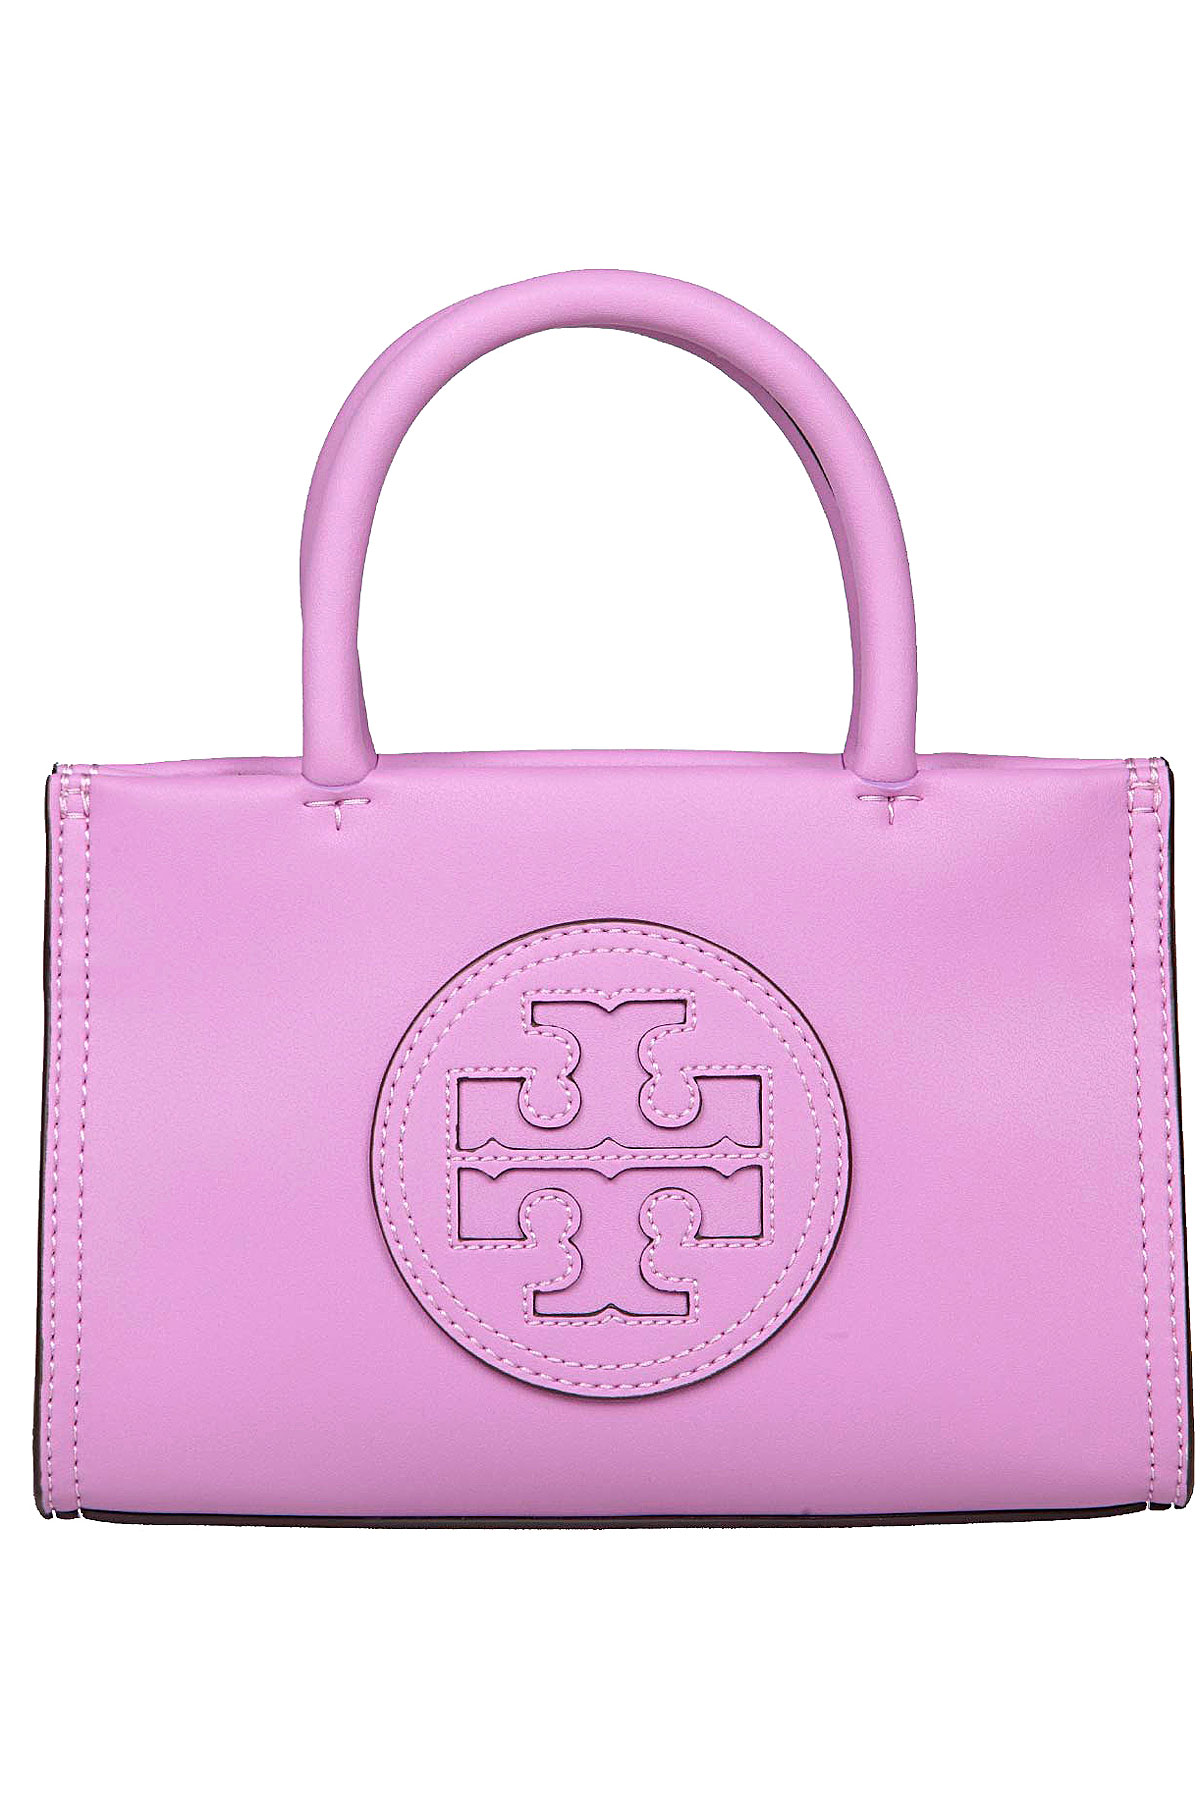 Handbags Tory Burch, Style code: 145613-500-